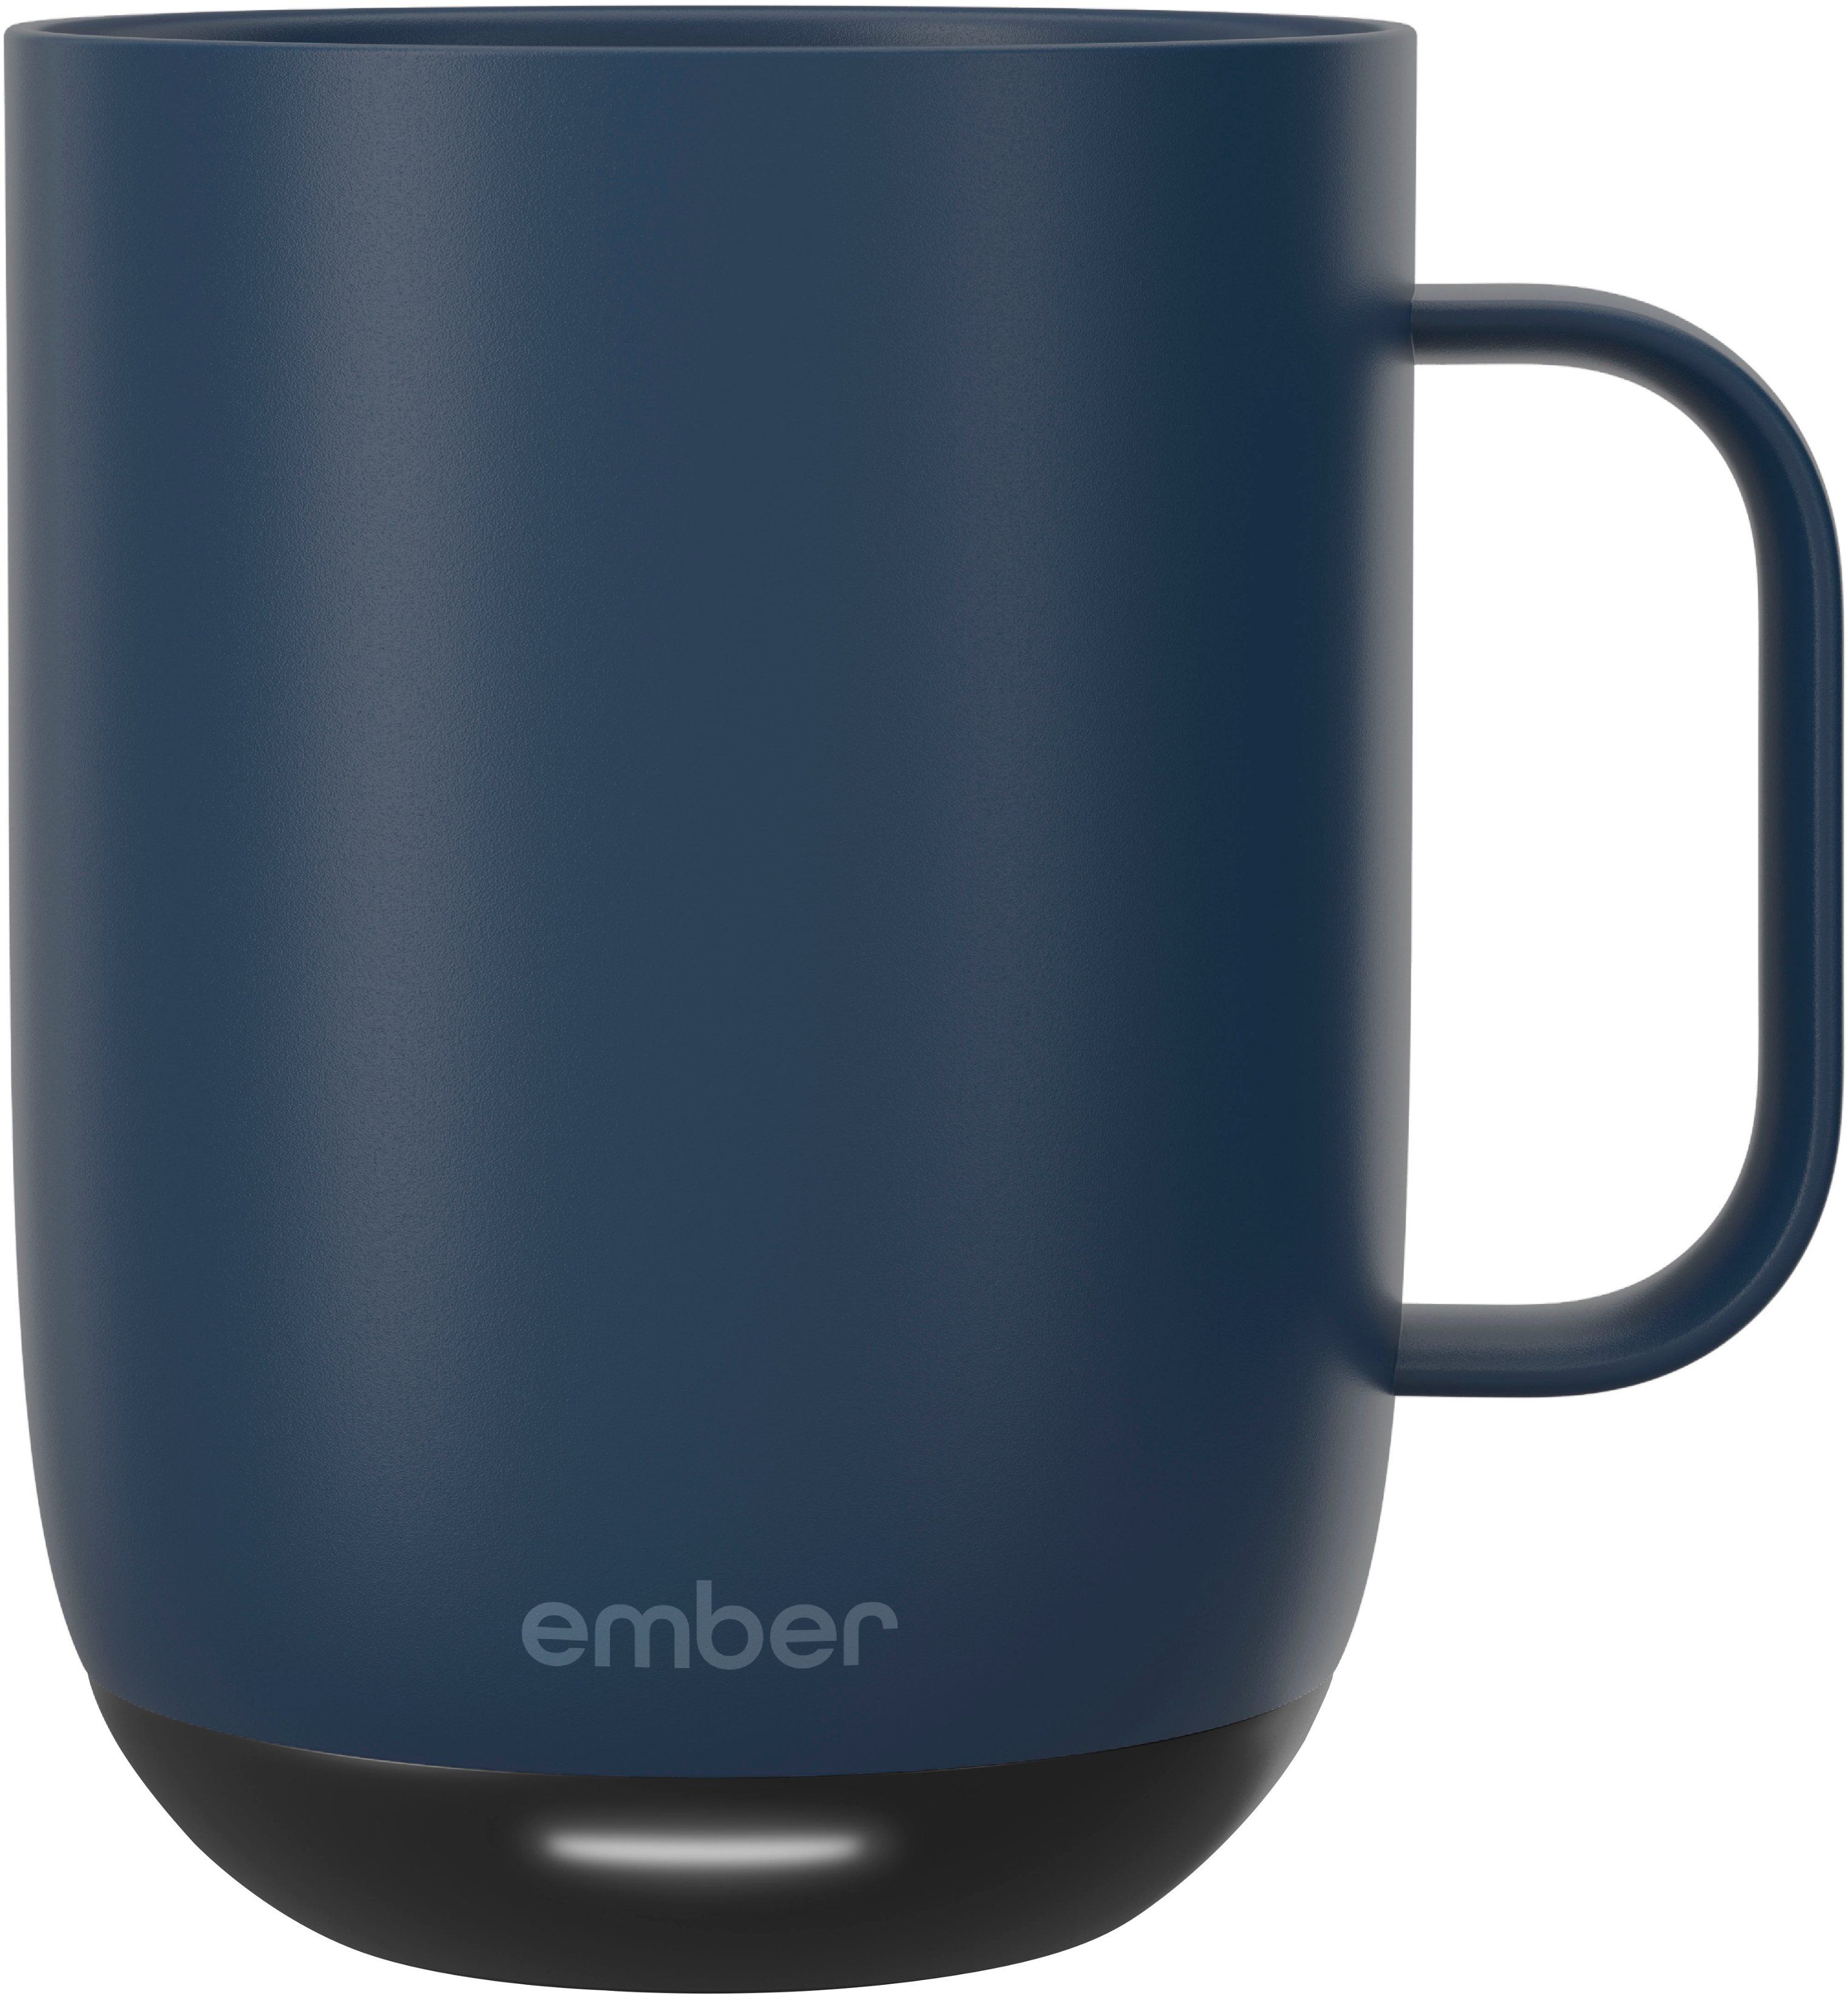 Ember Temperature Control Smart Mug² 14 oz Blue CM191409US - Best Buy | Best Buy U.S.